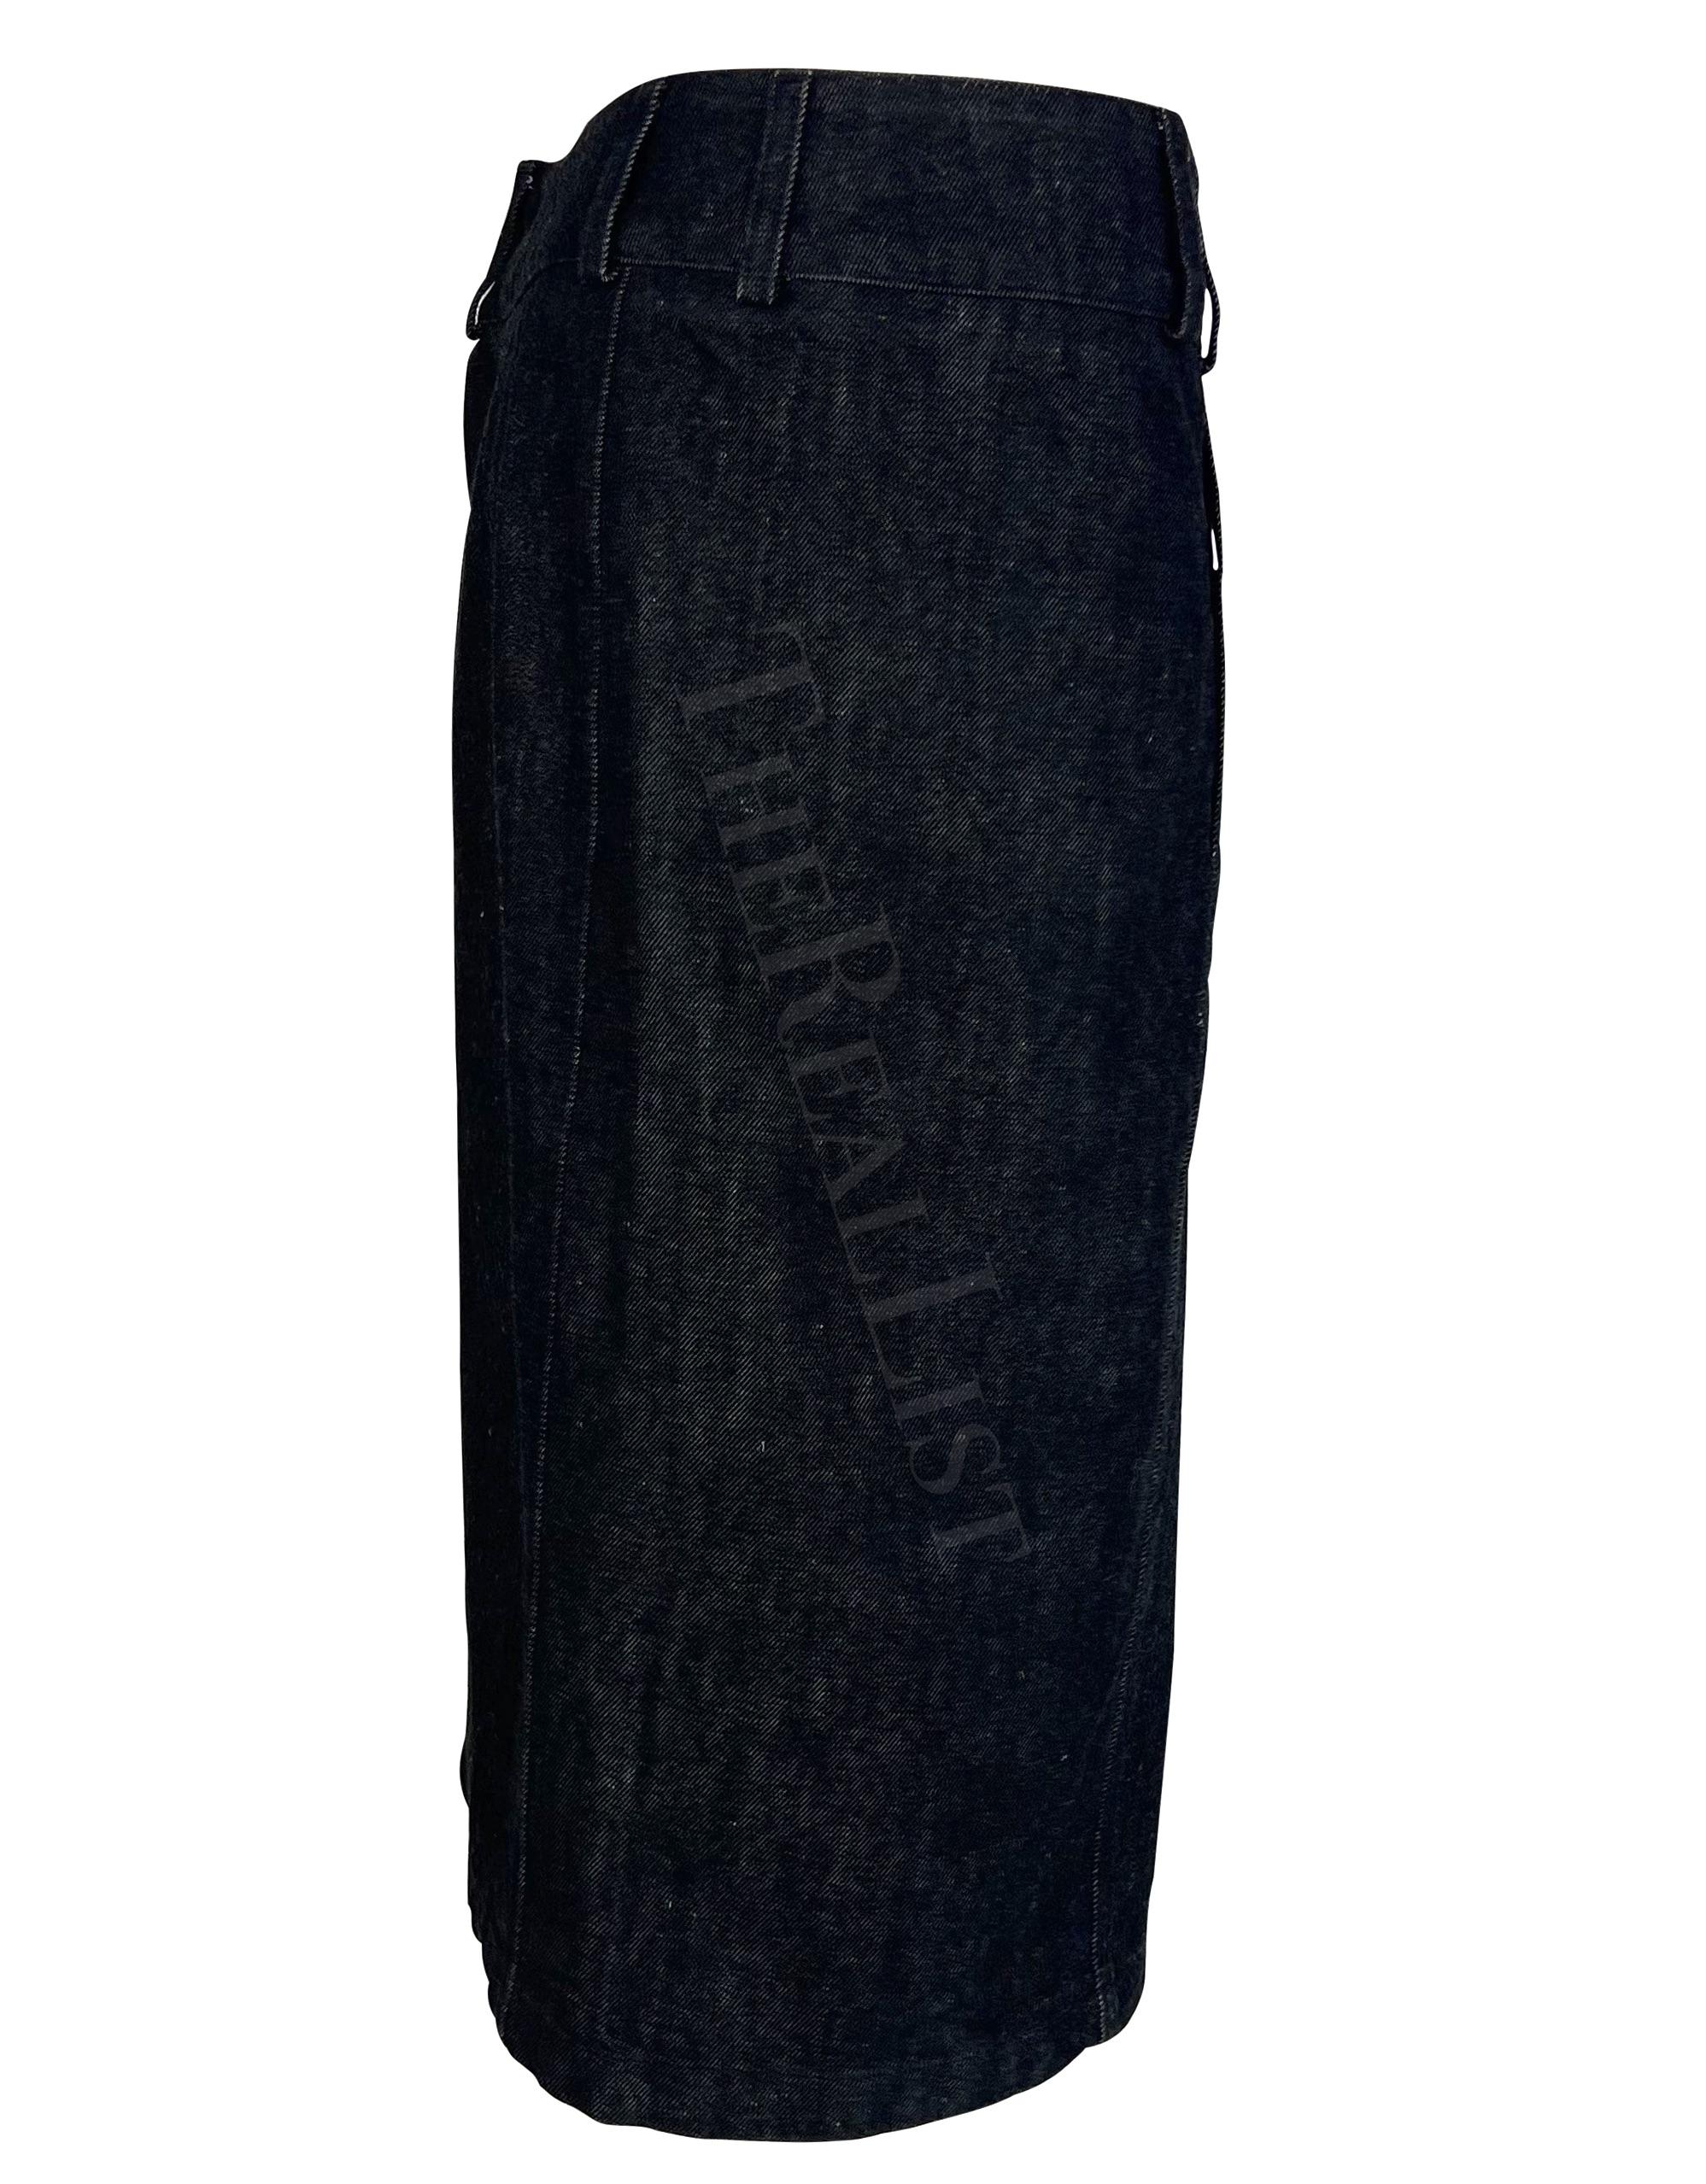 1999 Gucci by Tom Ford Dark Denim Zipper Skirt For Sale 3